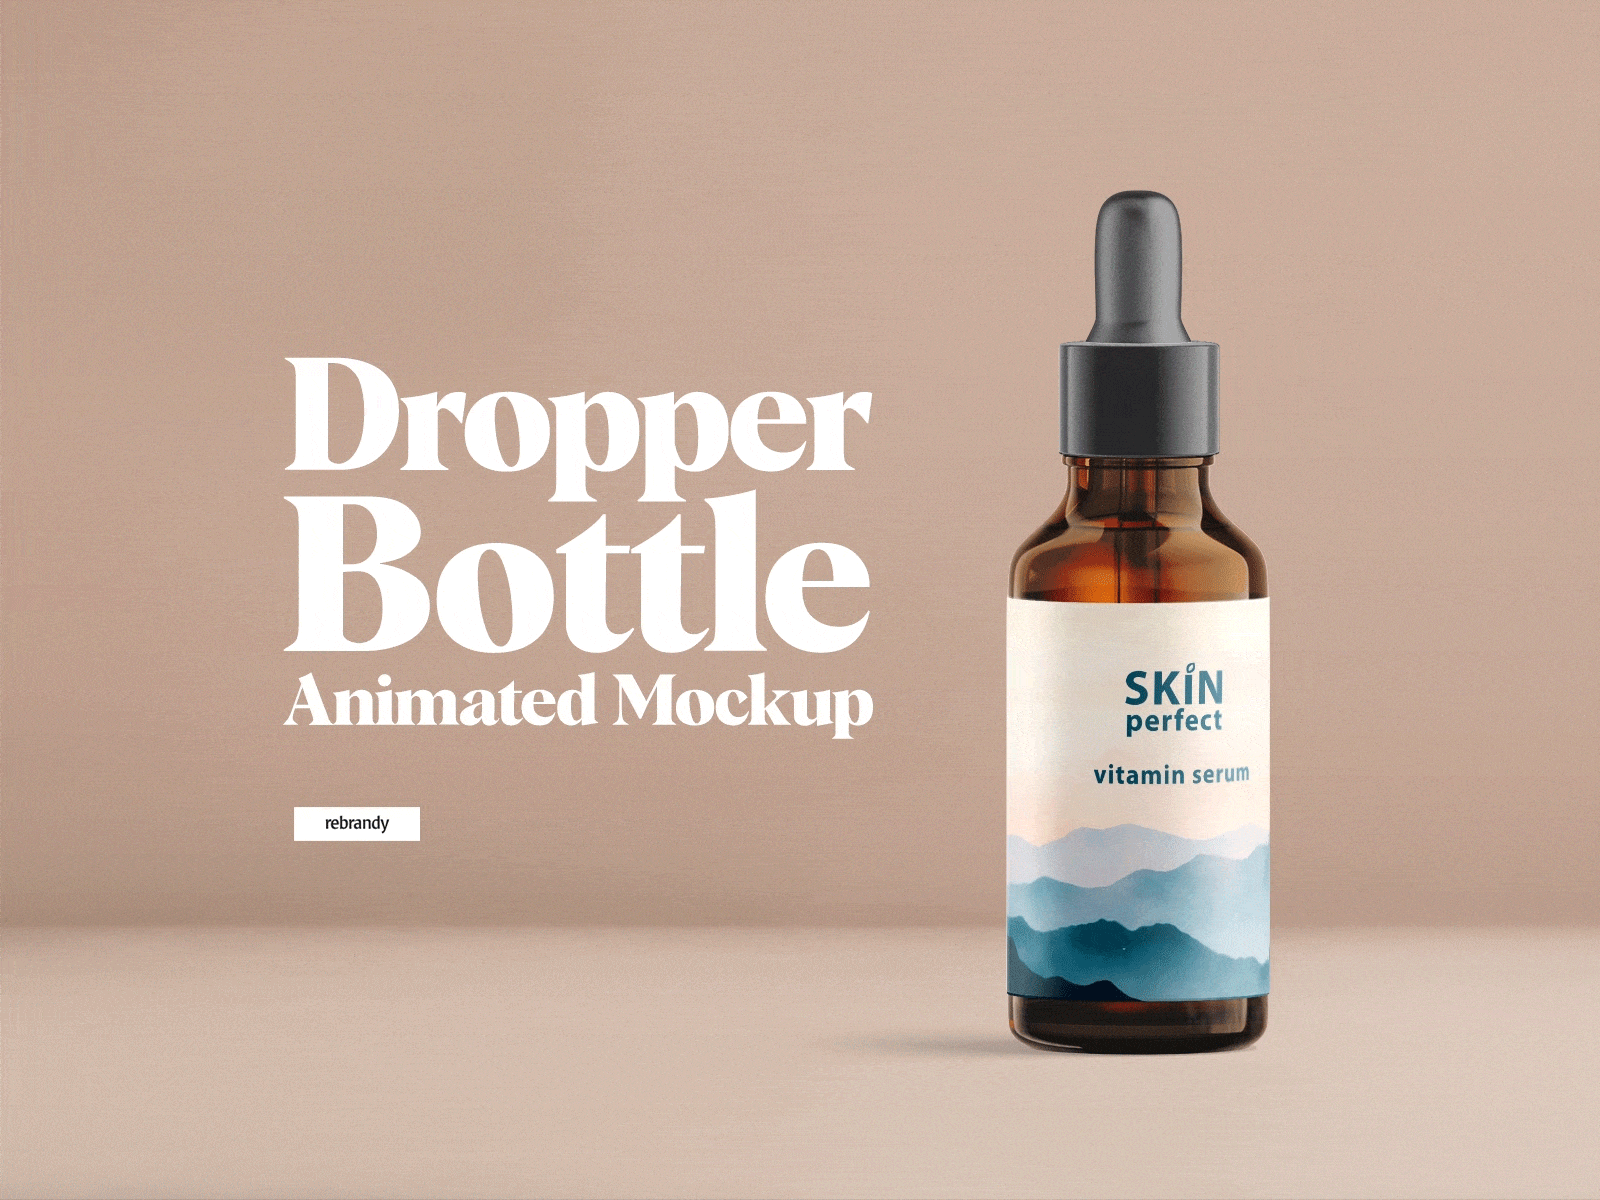 Dropper Bottle Animated Mockup skincare packaging